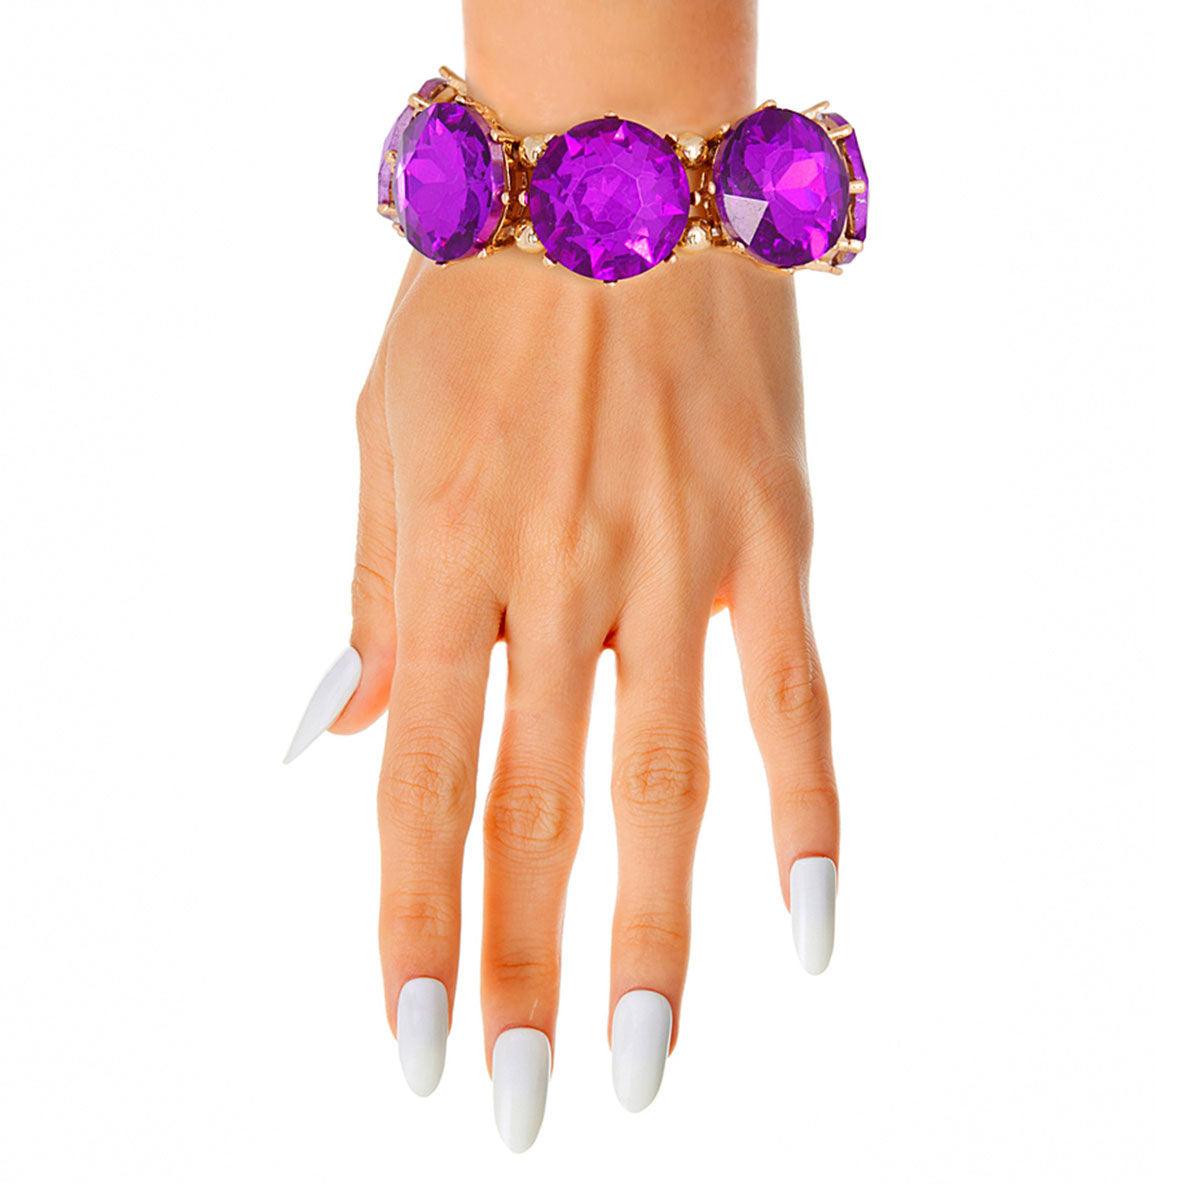 Round Dark Purple Bracelet Gold Plated: Buy Now!